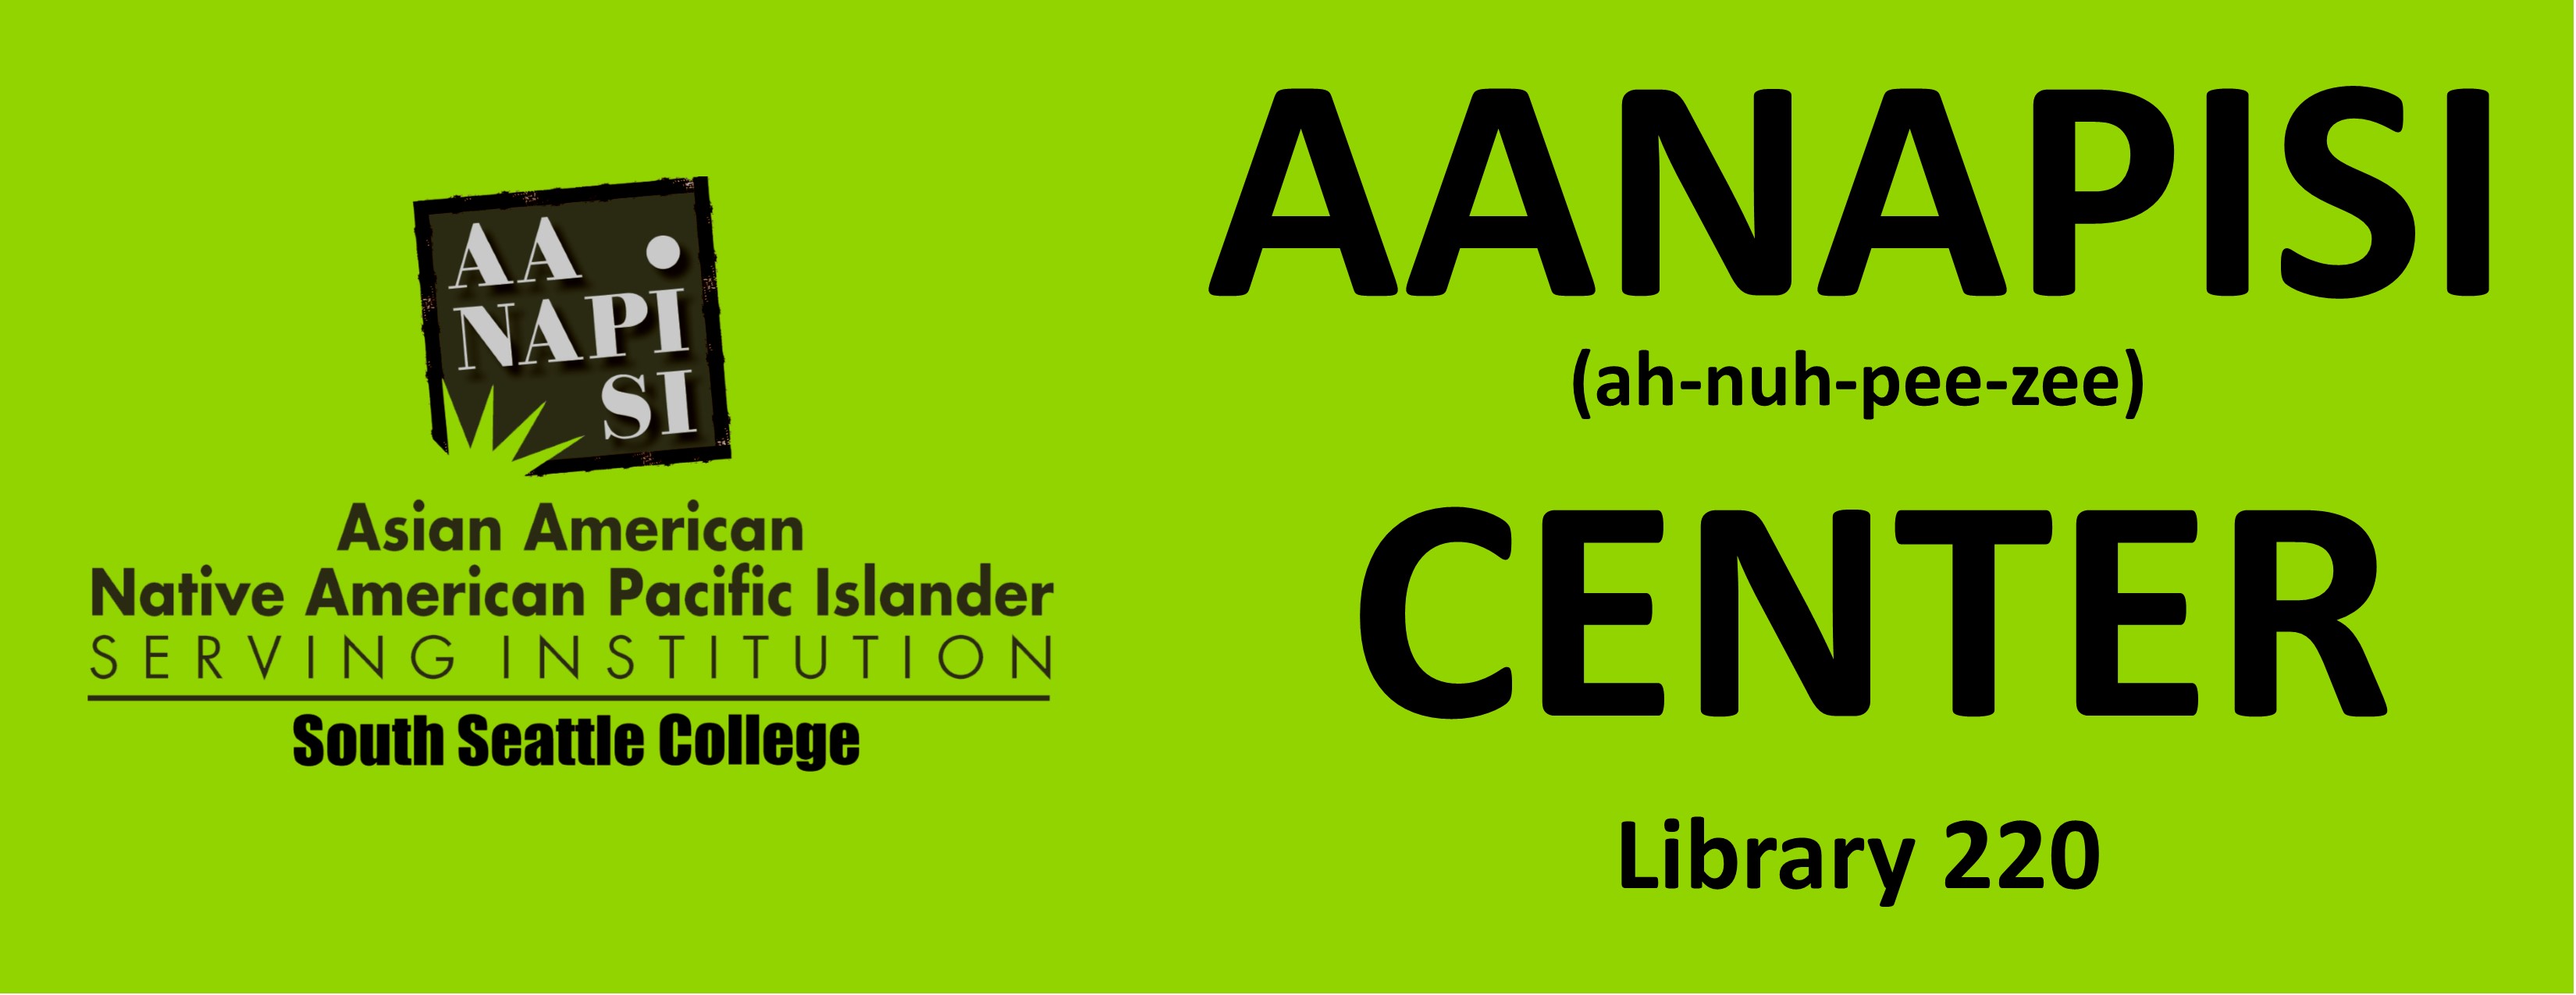 AANAPISI Center Library 220